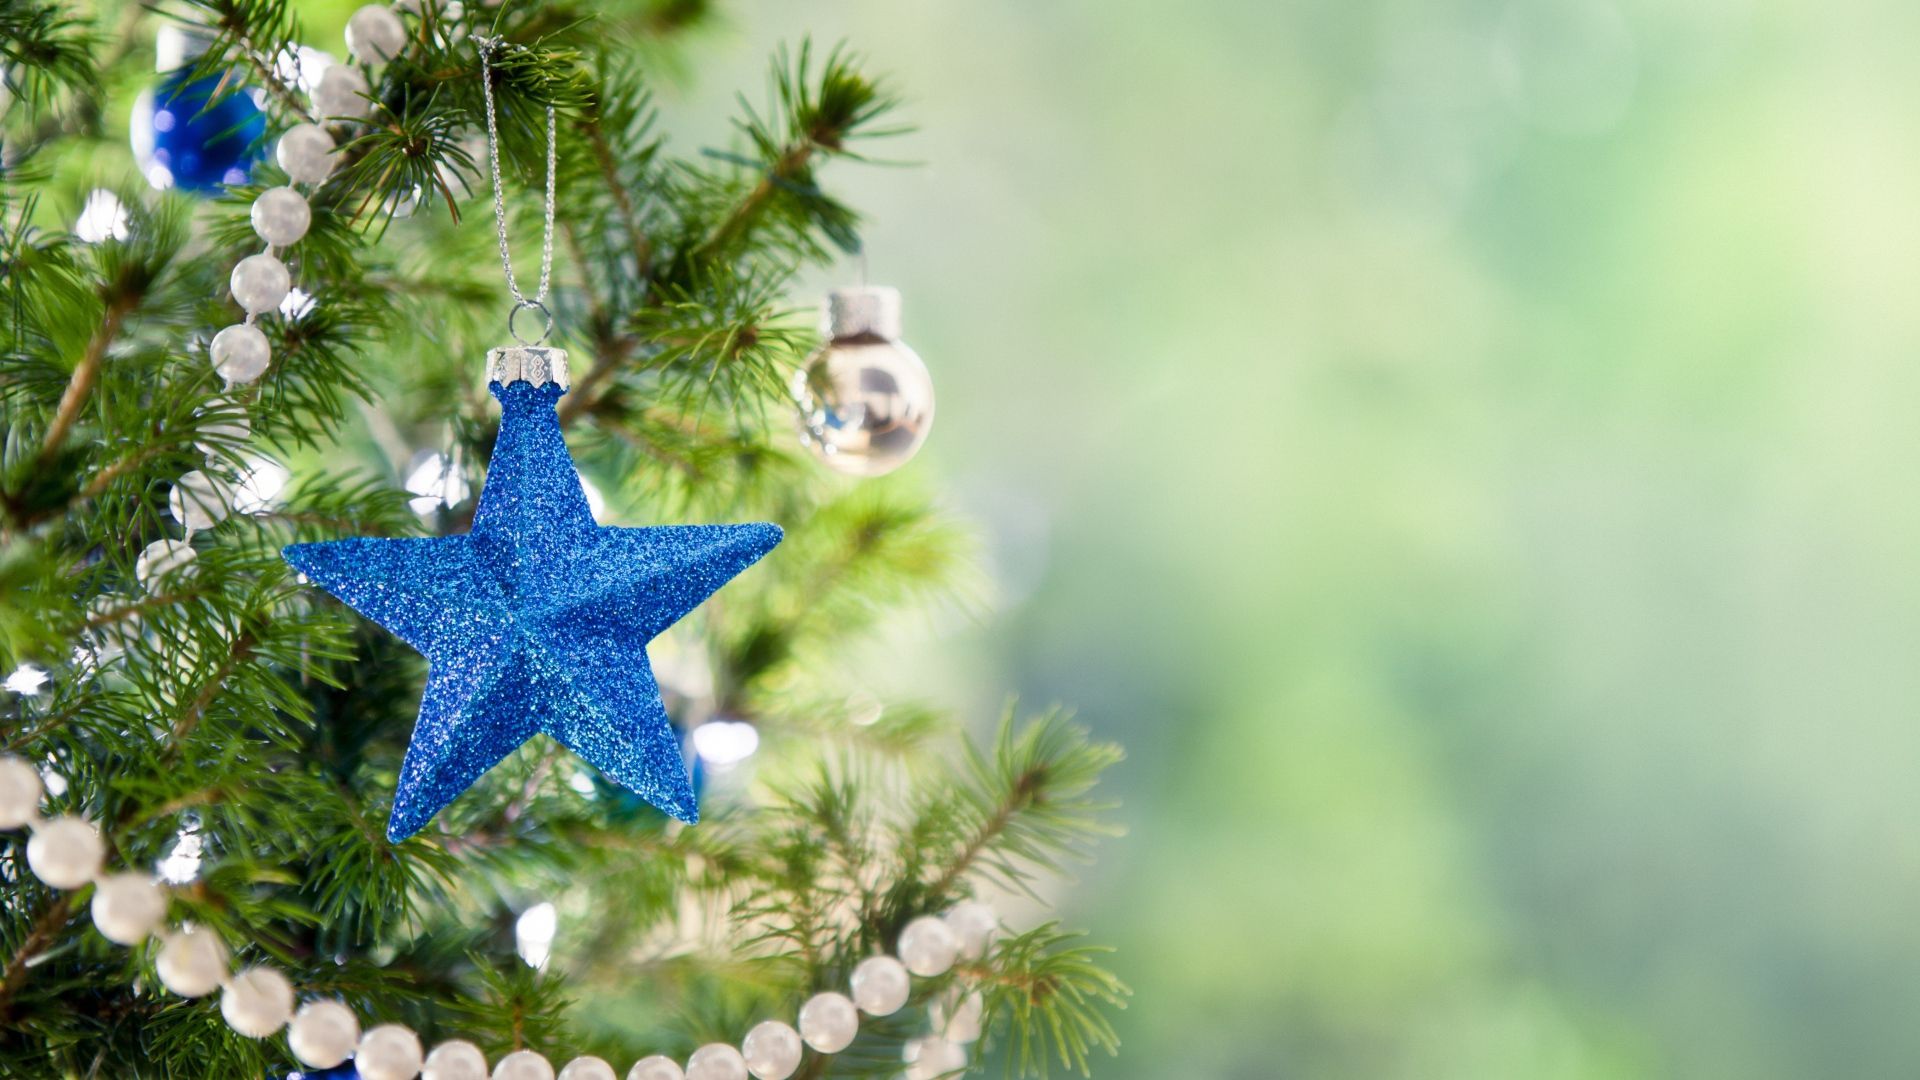 Blue star on the Christmas tree on Christmas Desktop wallpaper 1920x1080